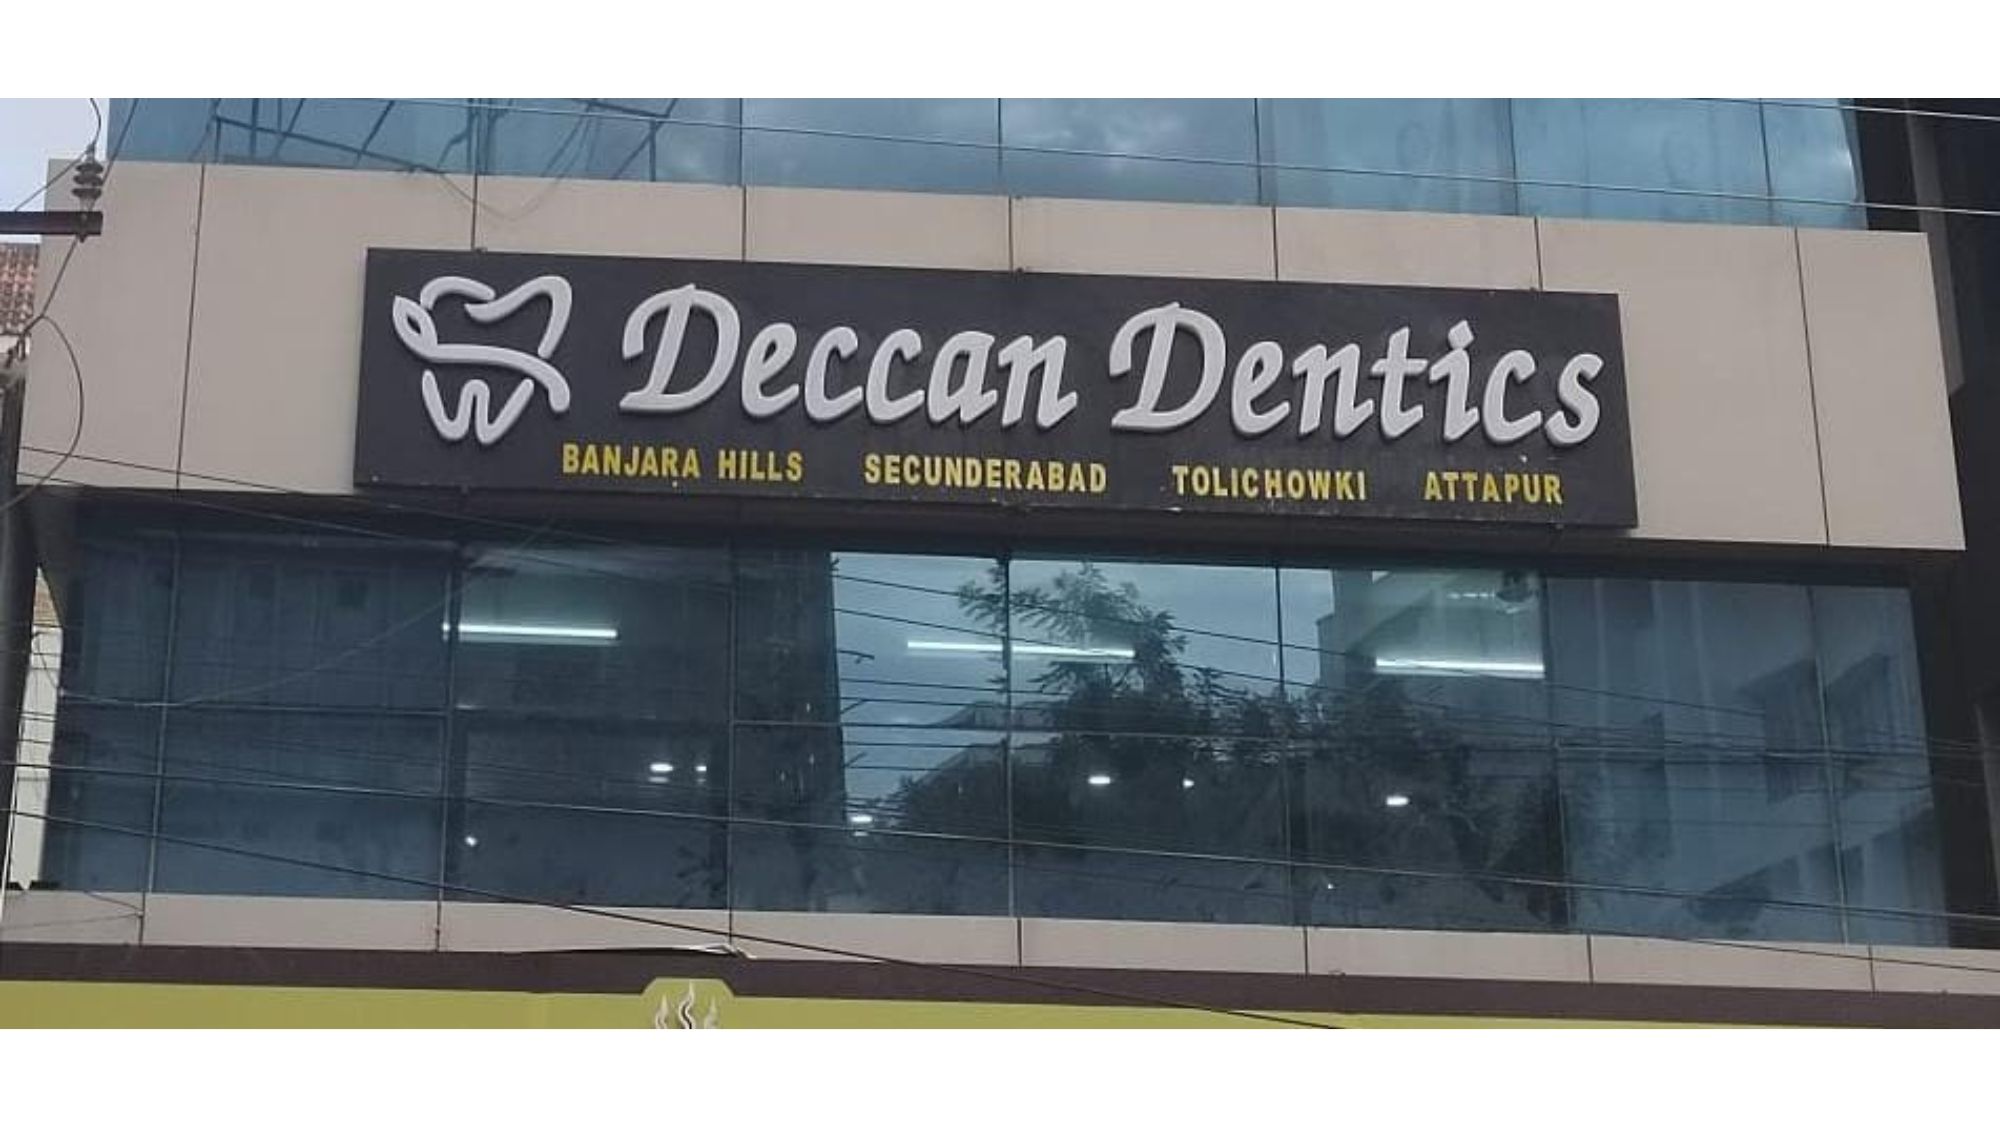 Our Happy Customer @ Deccan Dentics